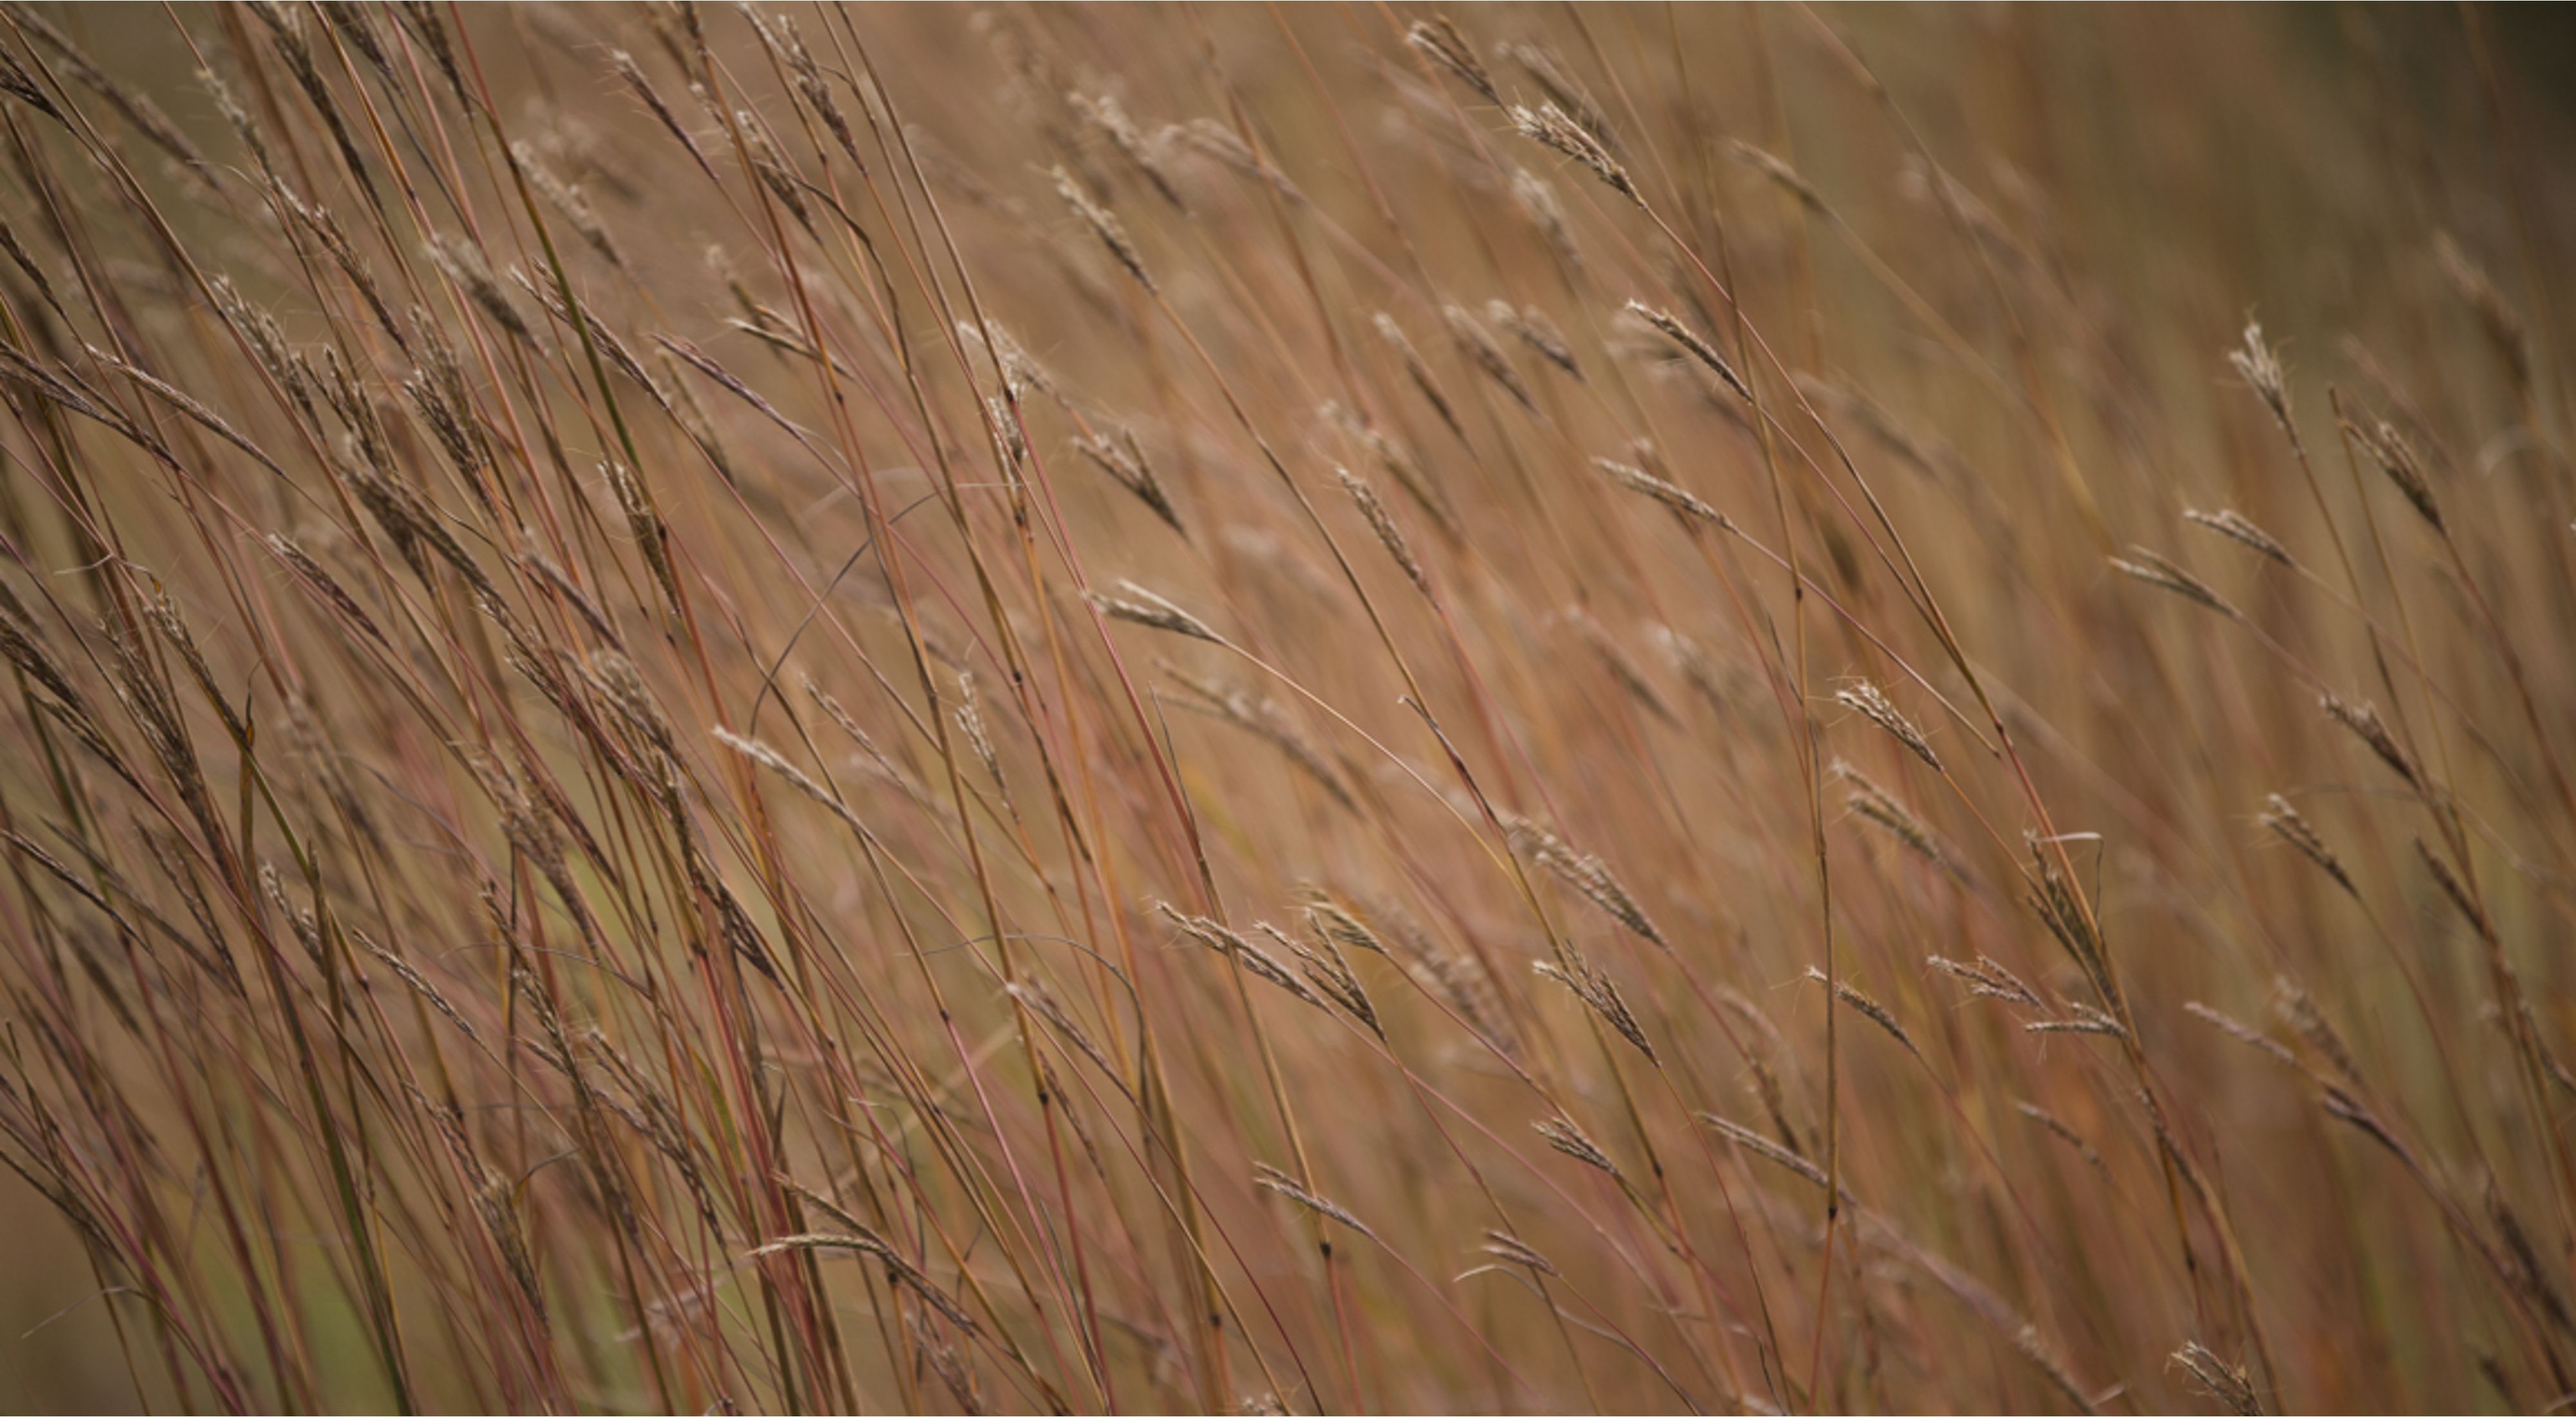 Golden grasses sway in the breeze.